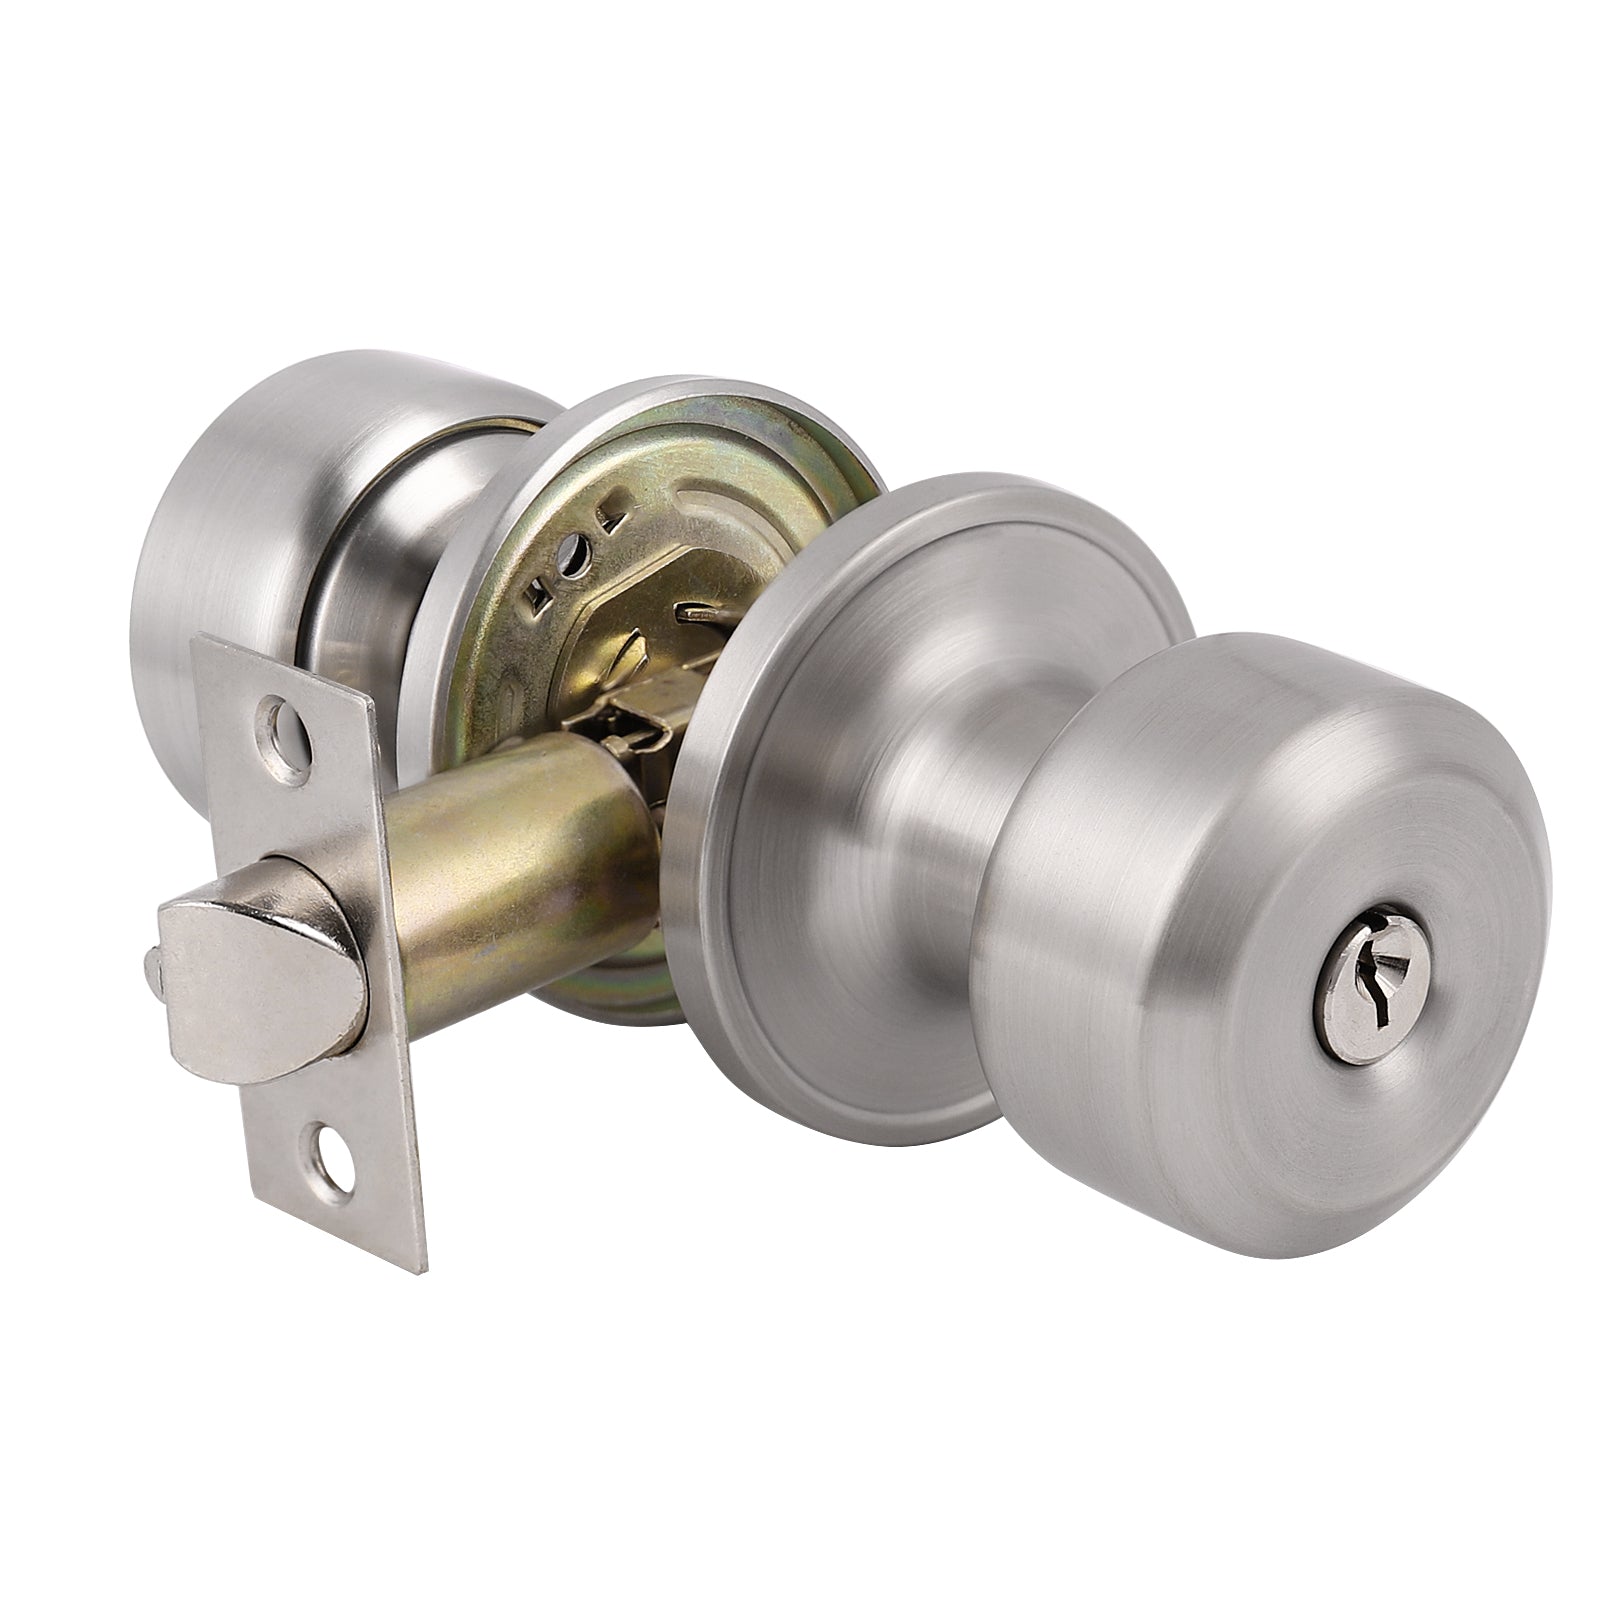 Satin Nickel Finish Entry Door Lock with Same Key, Cylinderical Ball Knob Style